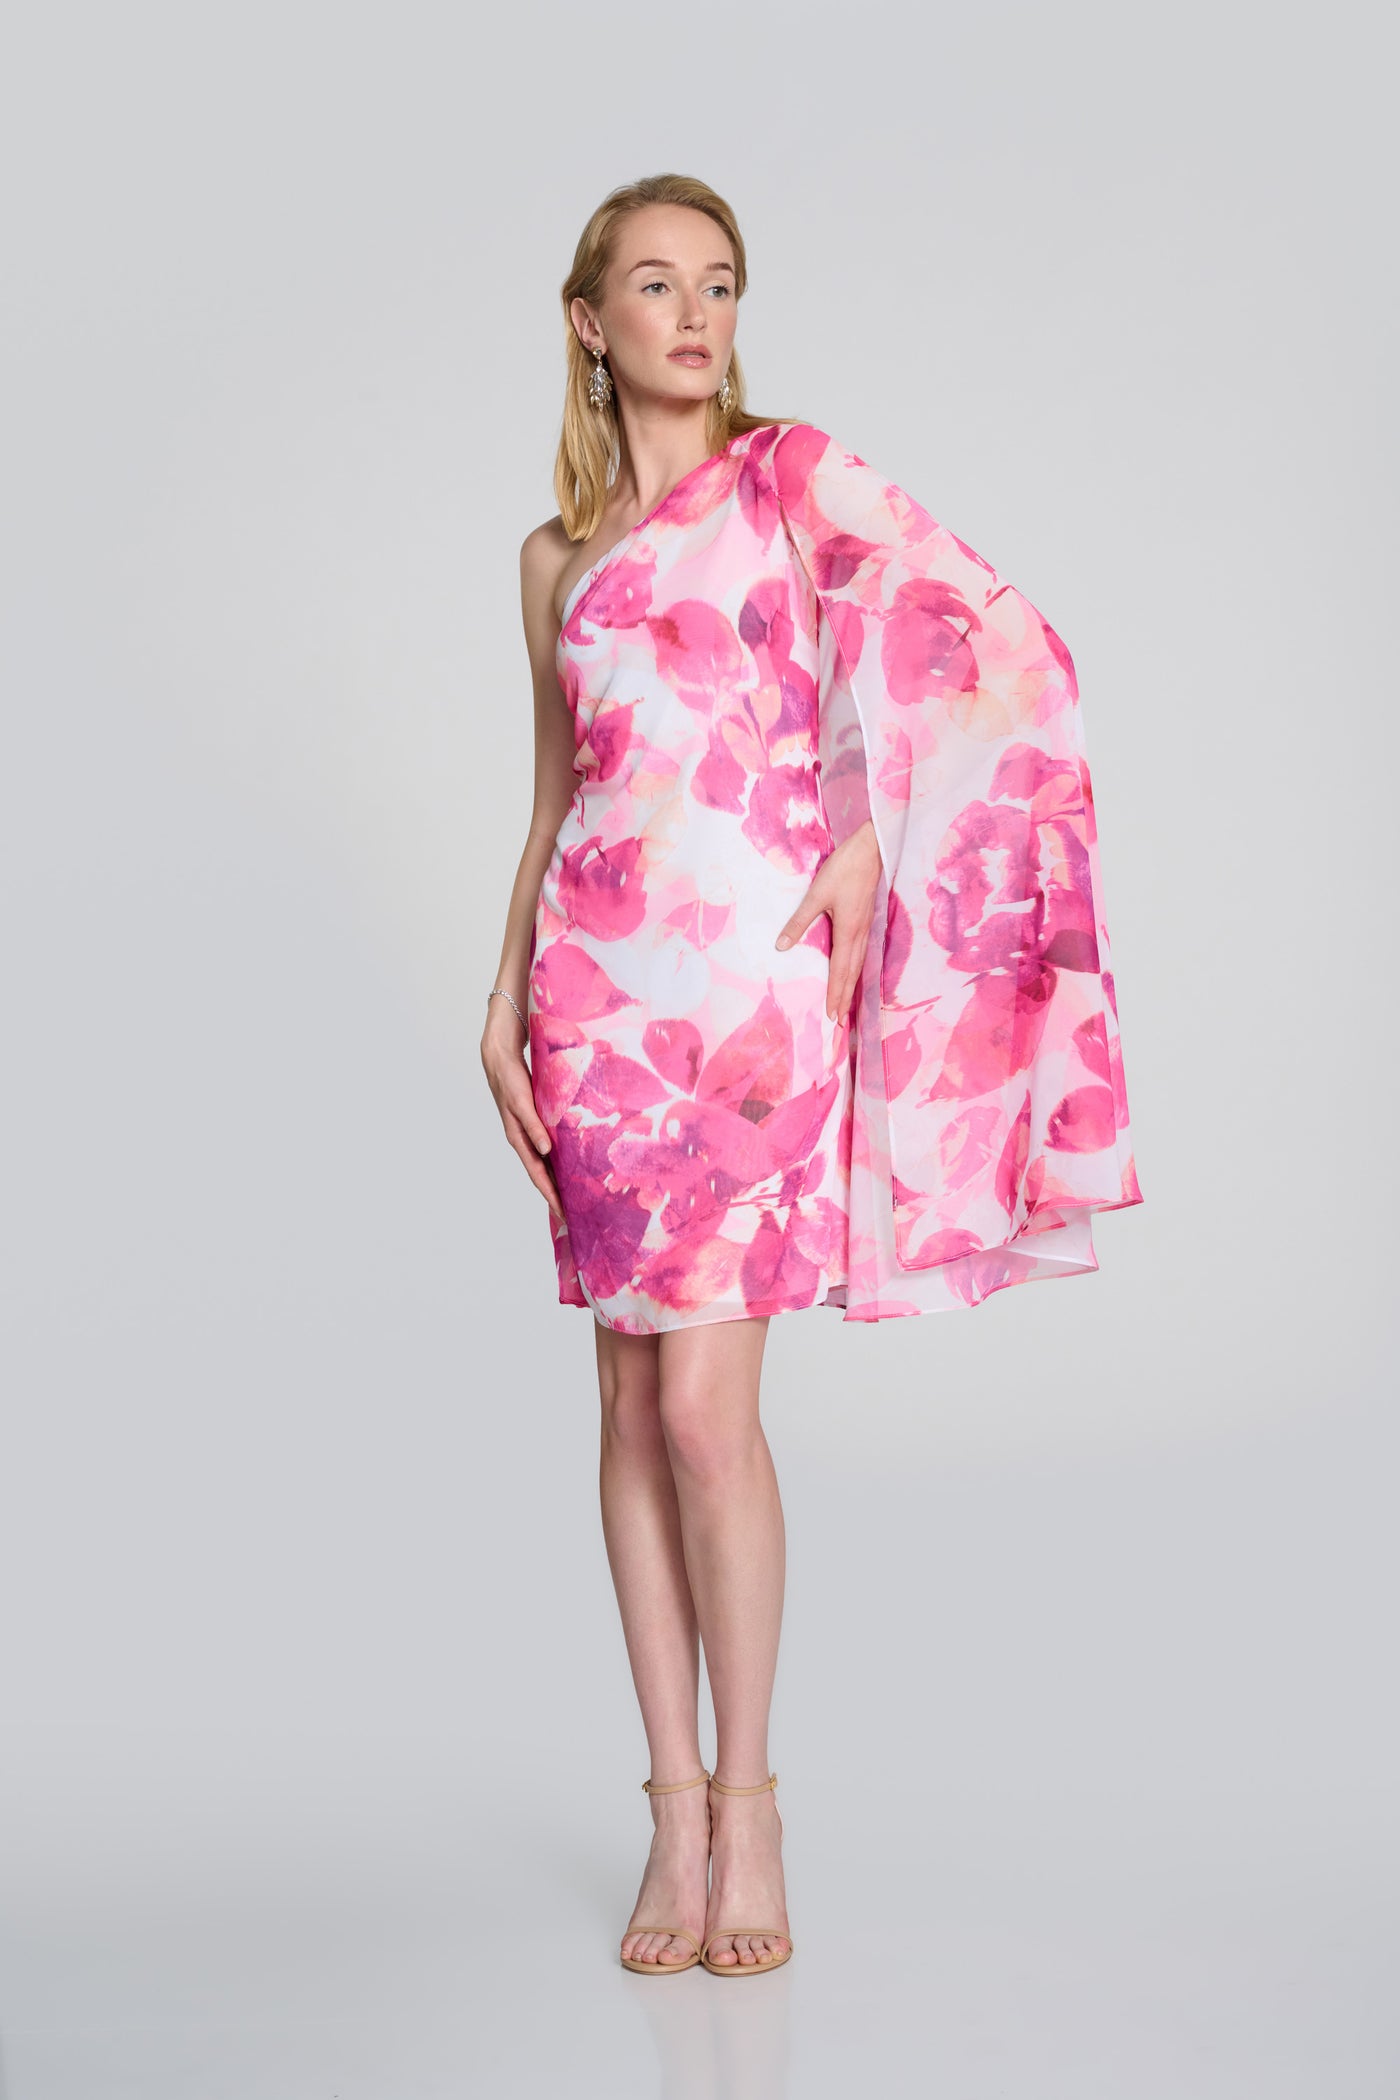 Joseph Ribkoff Pink & Vanilla Chiffon Floral One Shoulder Cape Dress